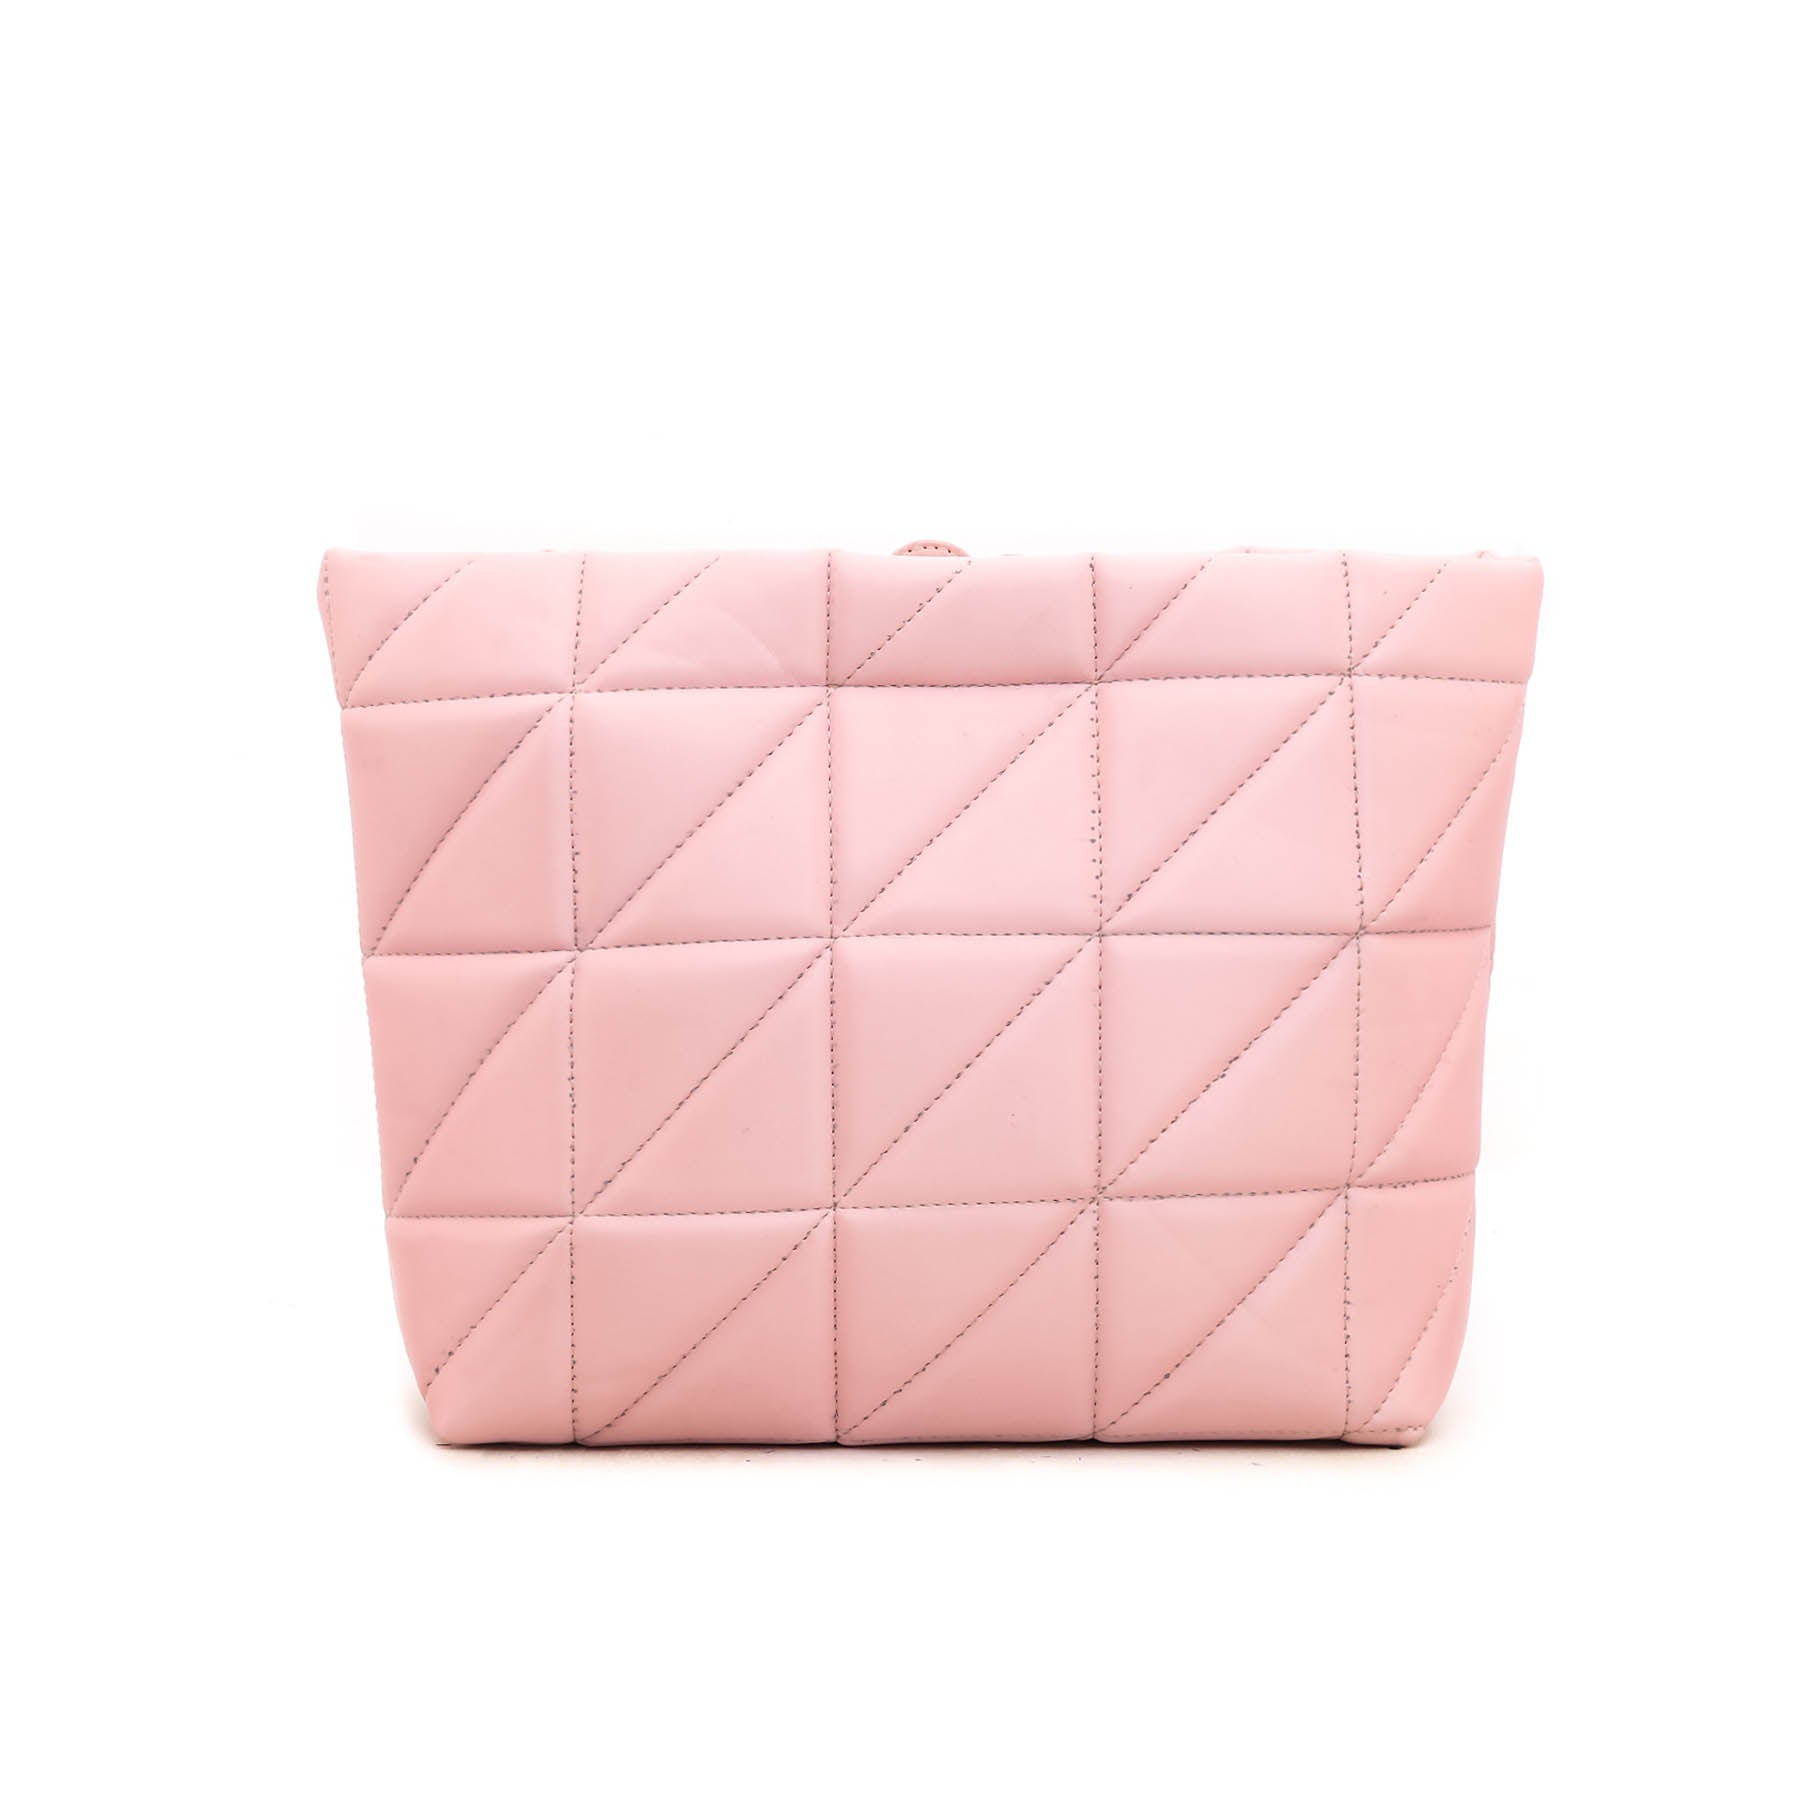 Pink Casual Shoulder Bag P54349